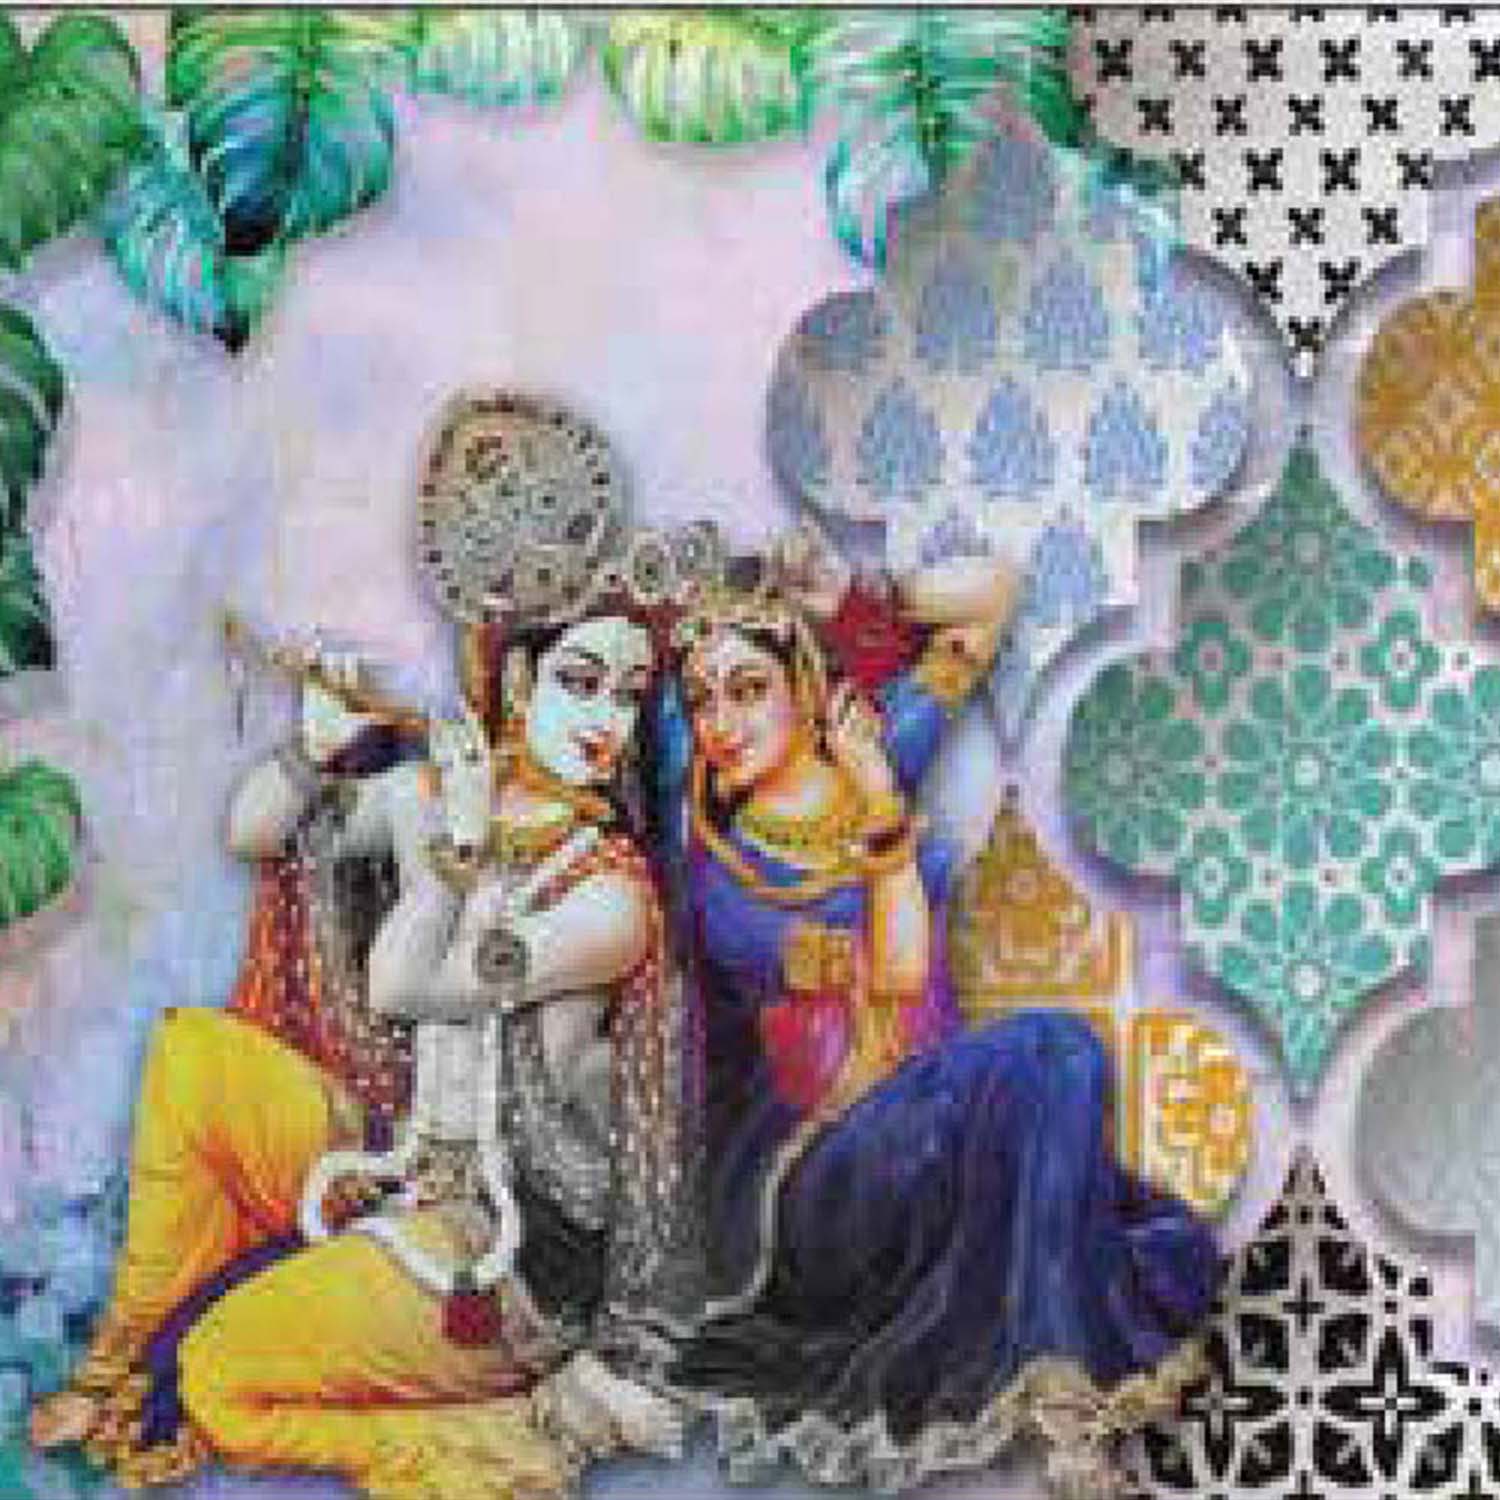 radha krishna 3d wallpapers